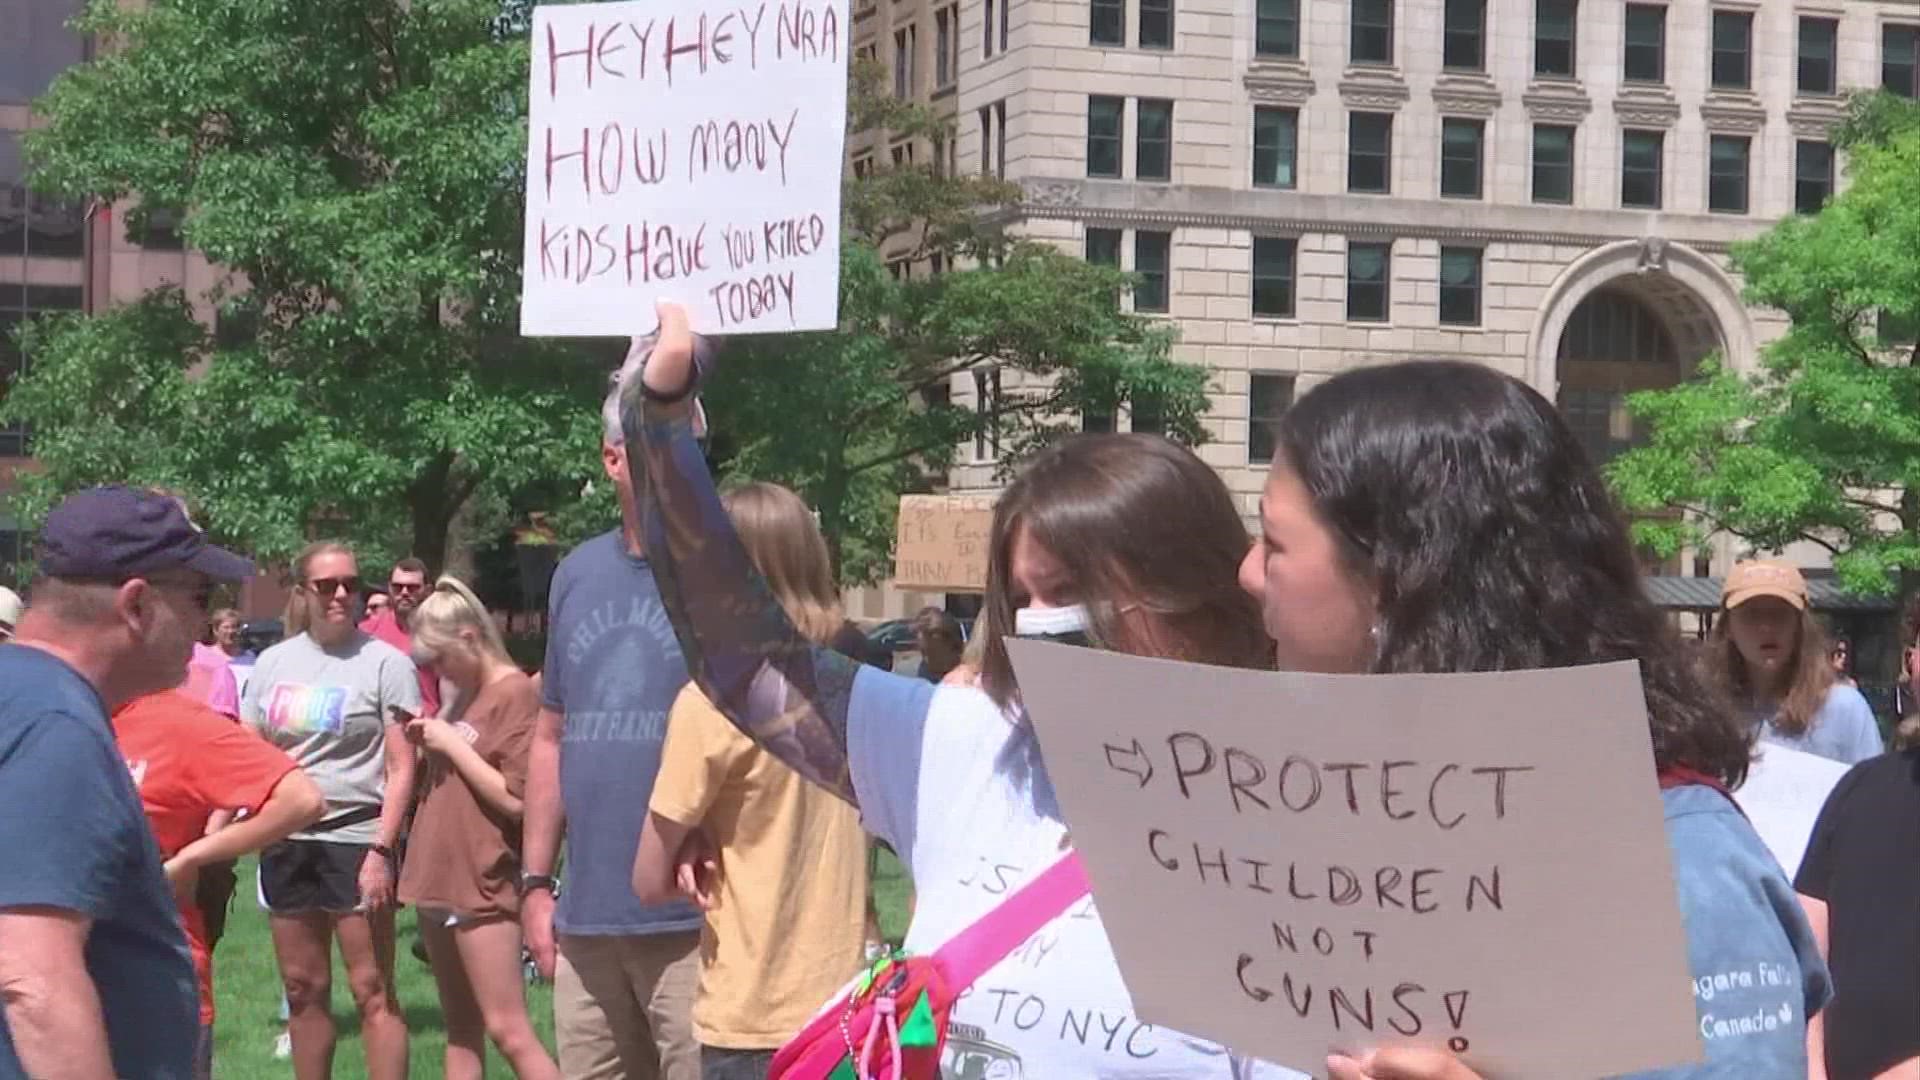 The people who gathered want legislators to pass legislation to prevent gun violence.